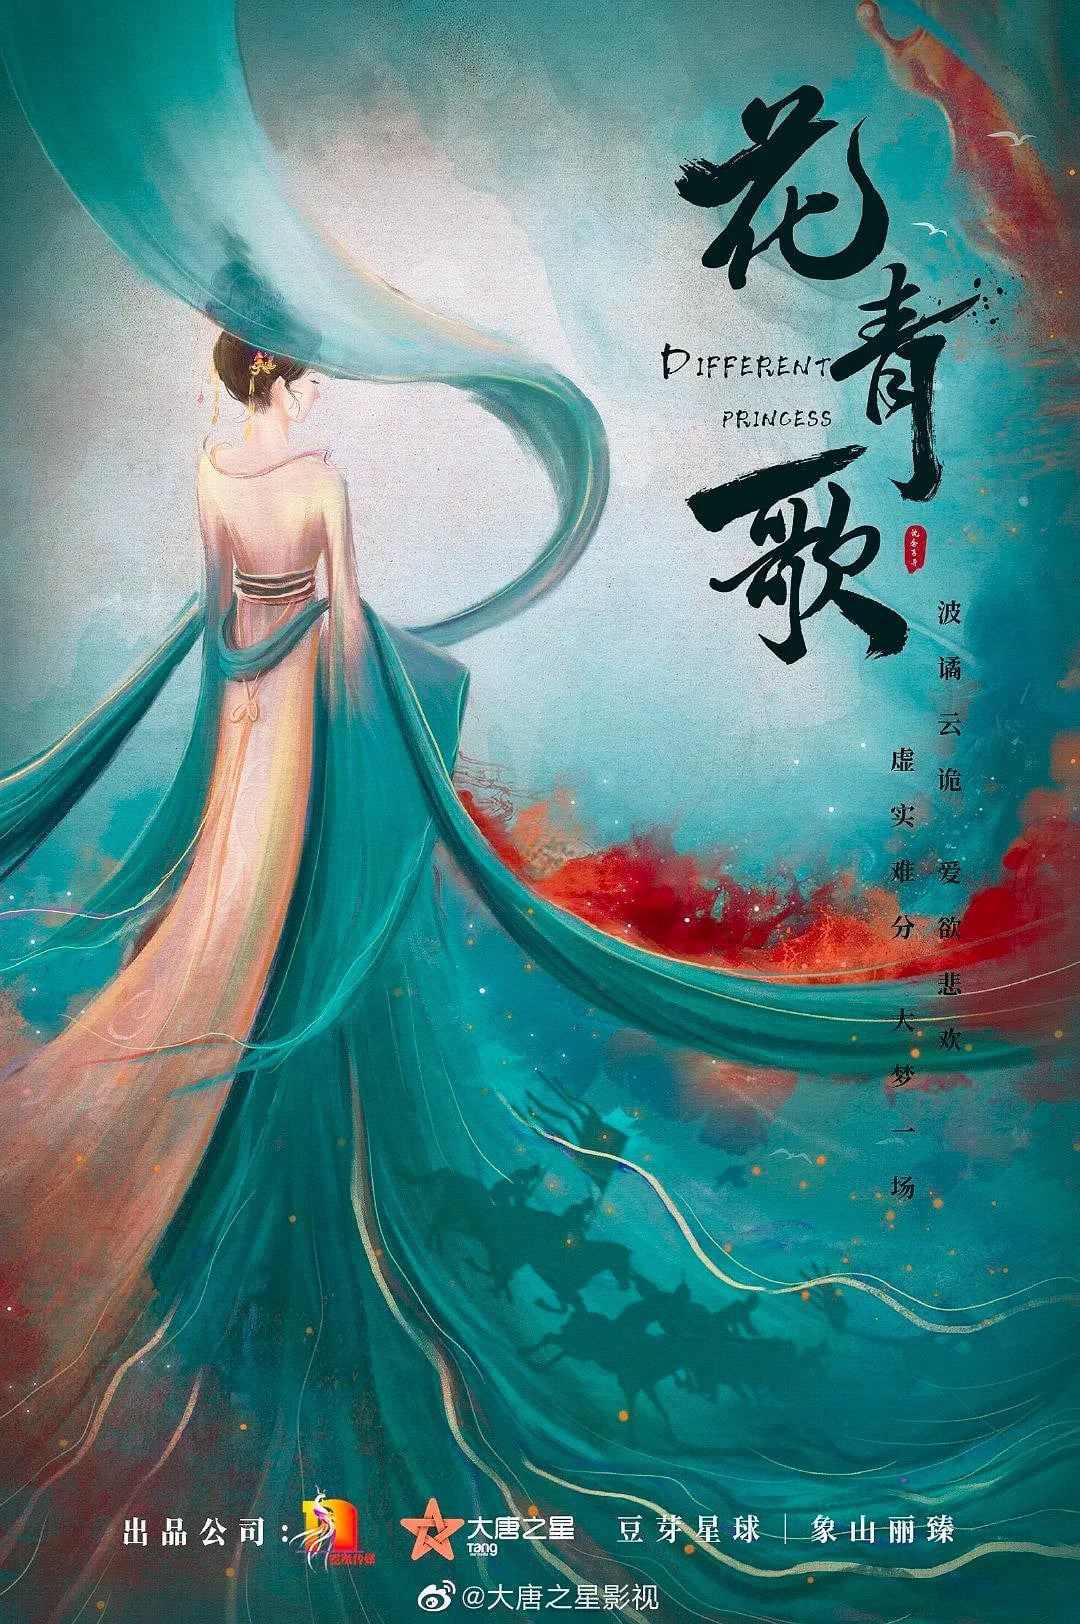 Hoa Thanh Ca - Different Princess